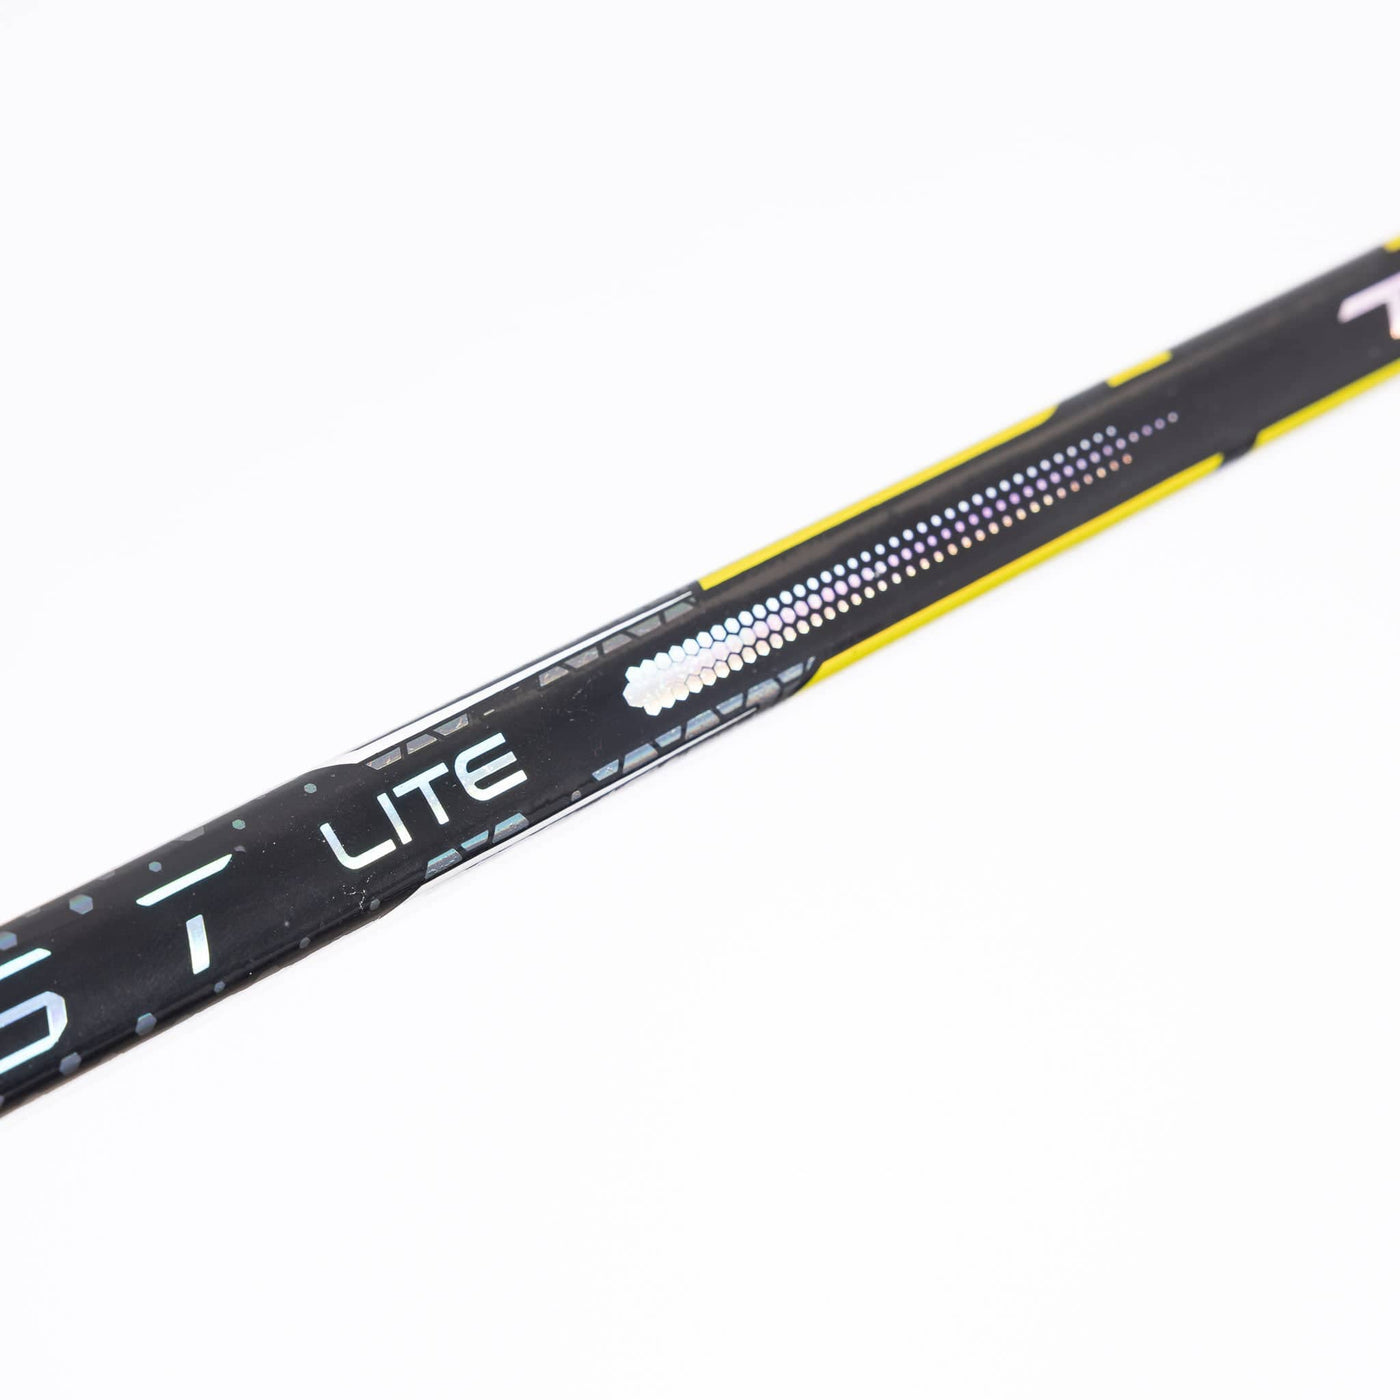 TRUE Catalyst Lite Intermediate Hockey Stick - The Hockey Shop Source For Sports